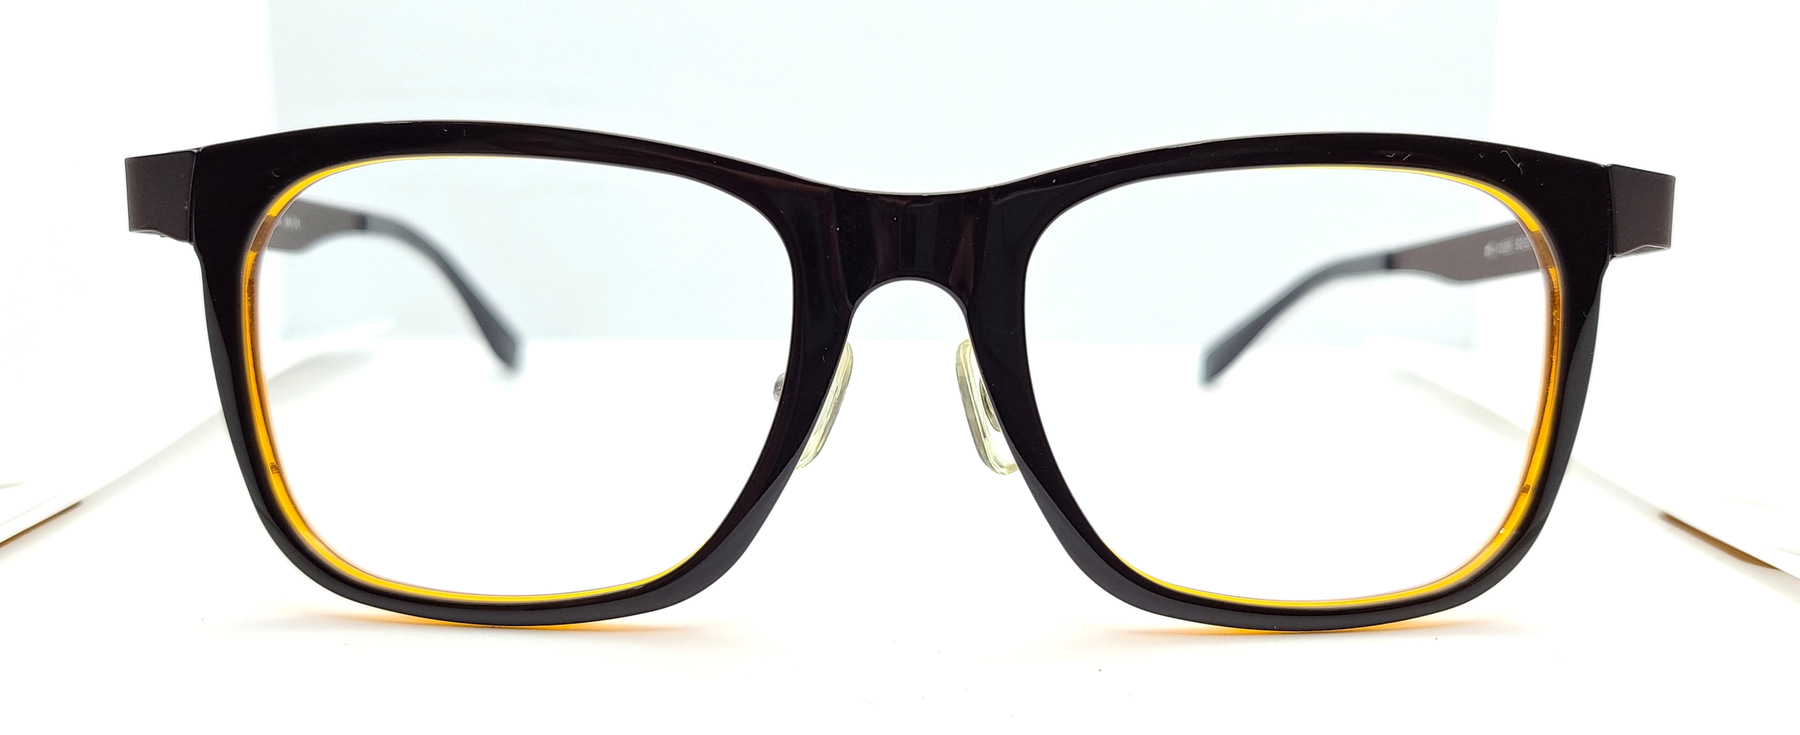 MINIHOUSE M-1225, Korean glasses, sunglasses, eyeglasses, glasses